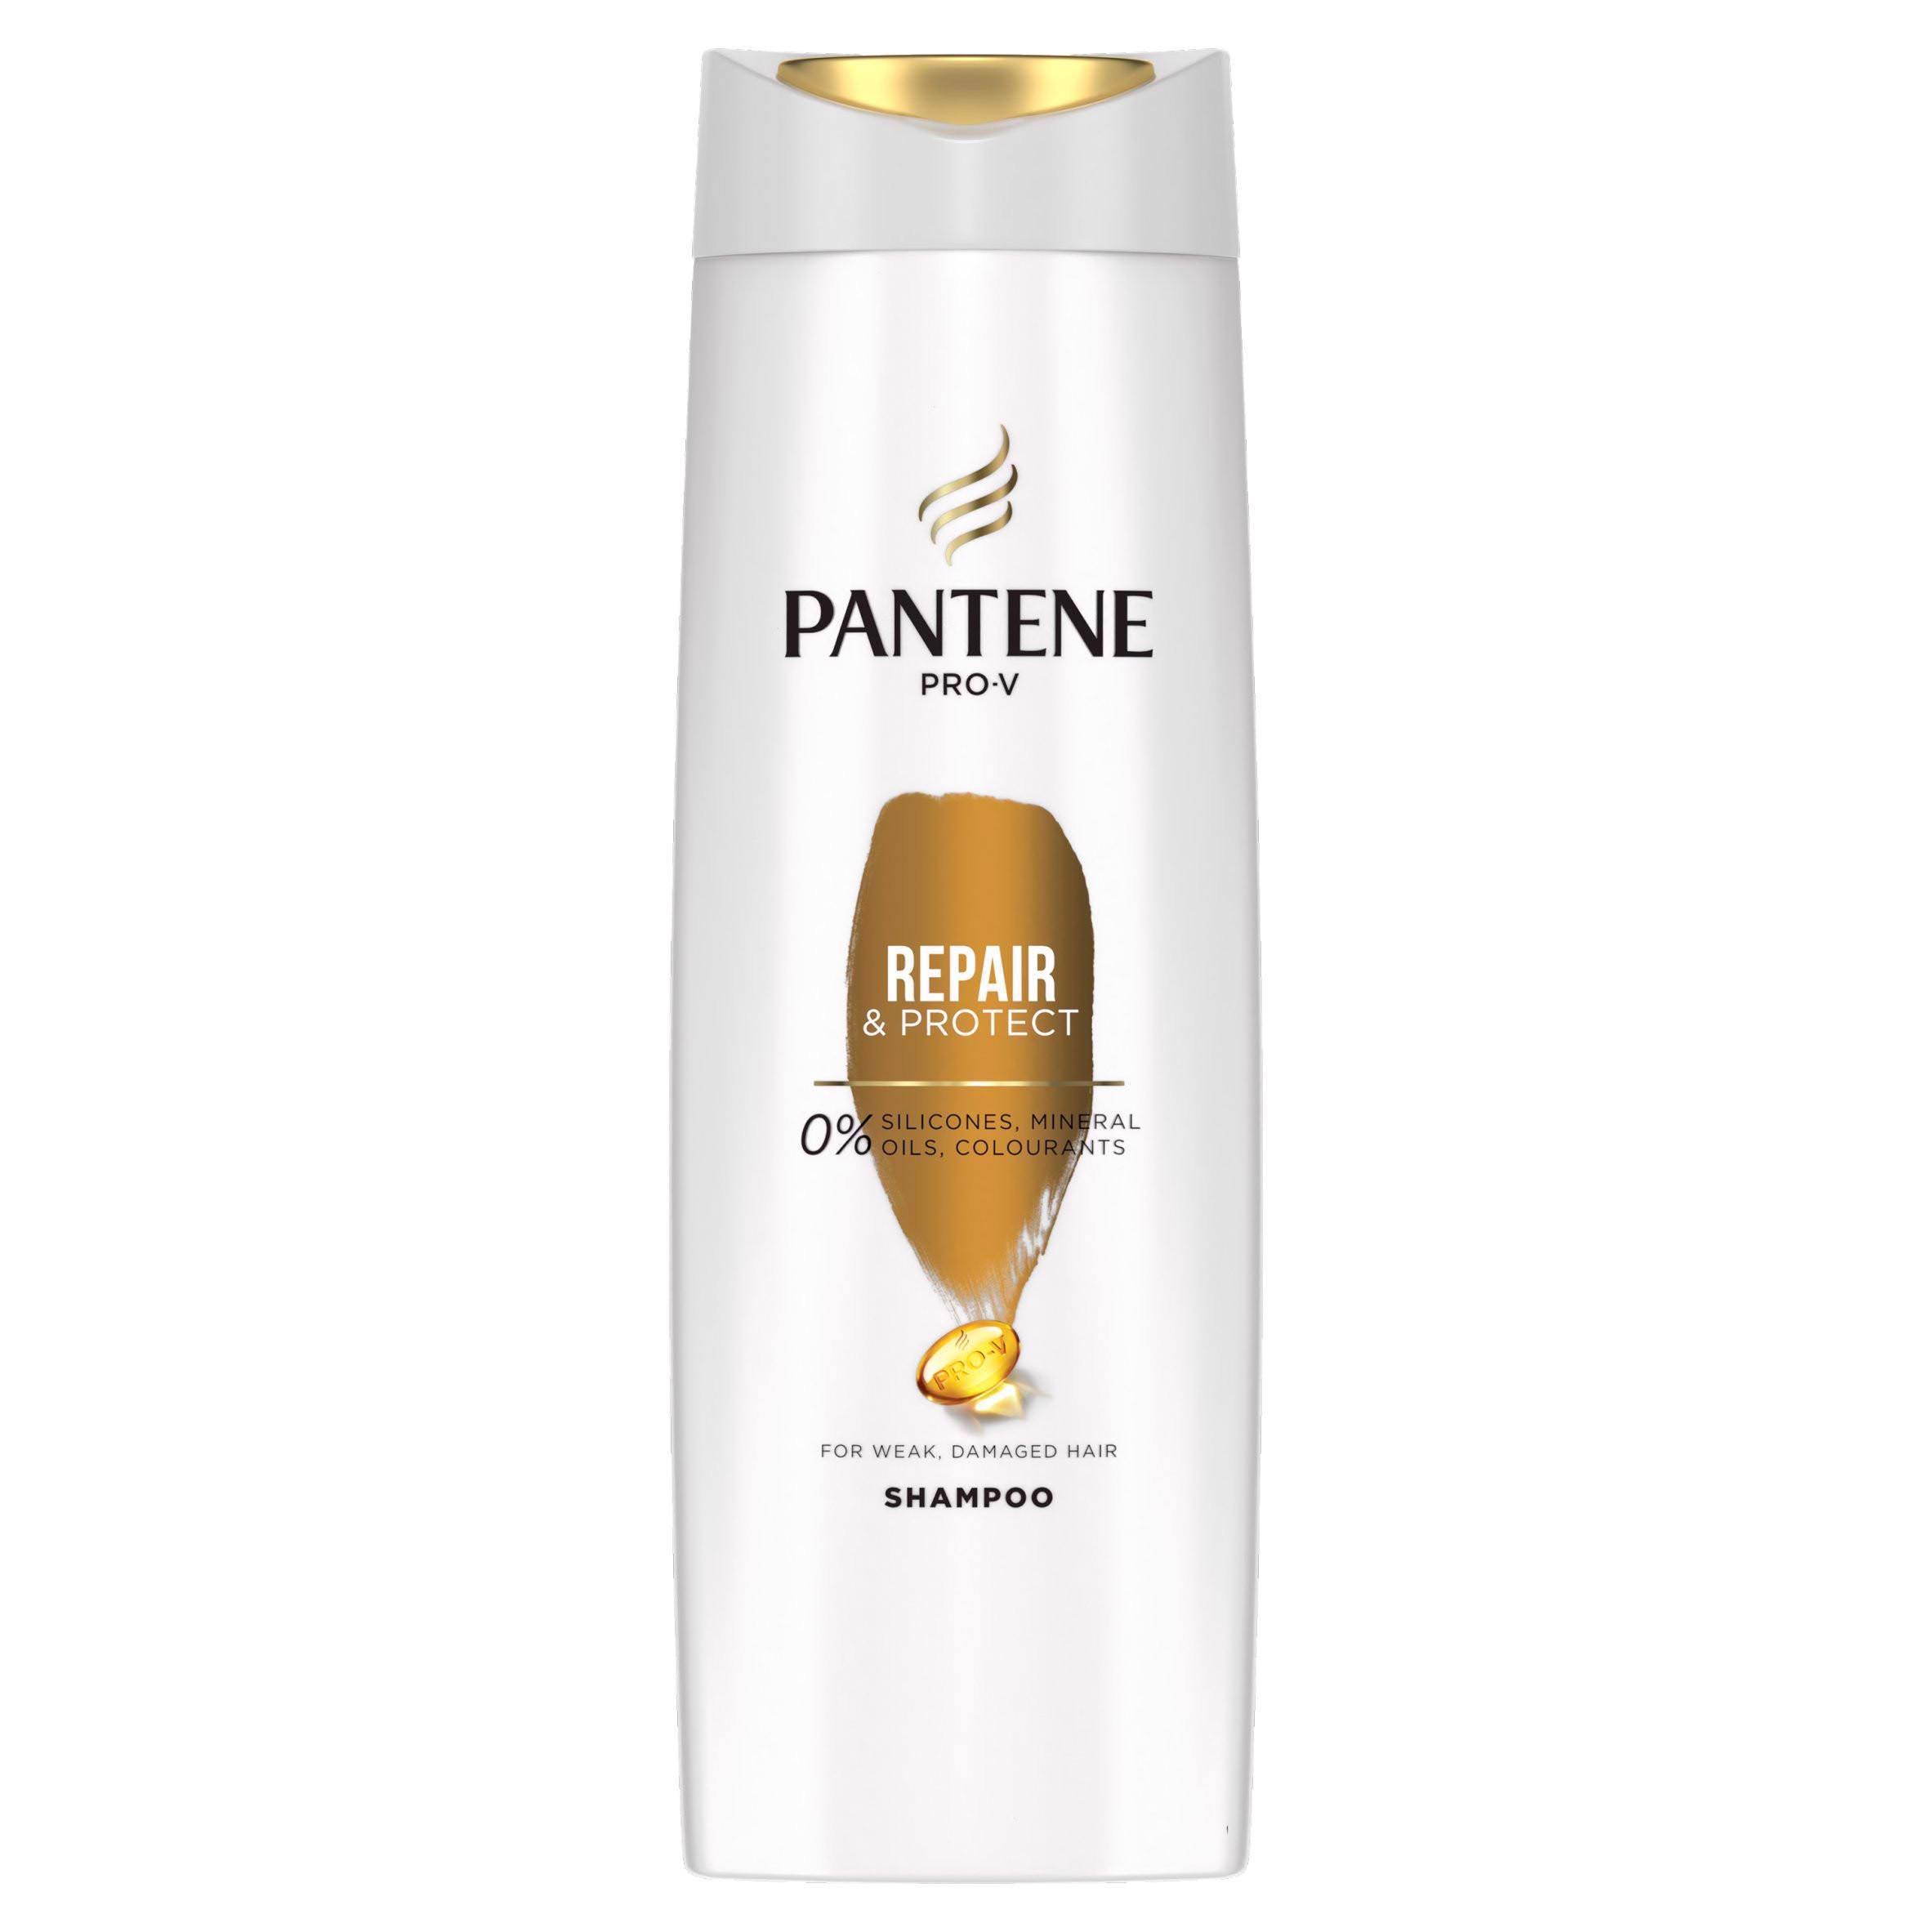 Pantene Pro-V Repair & Protect Shampoo - 360ml